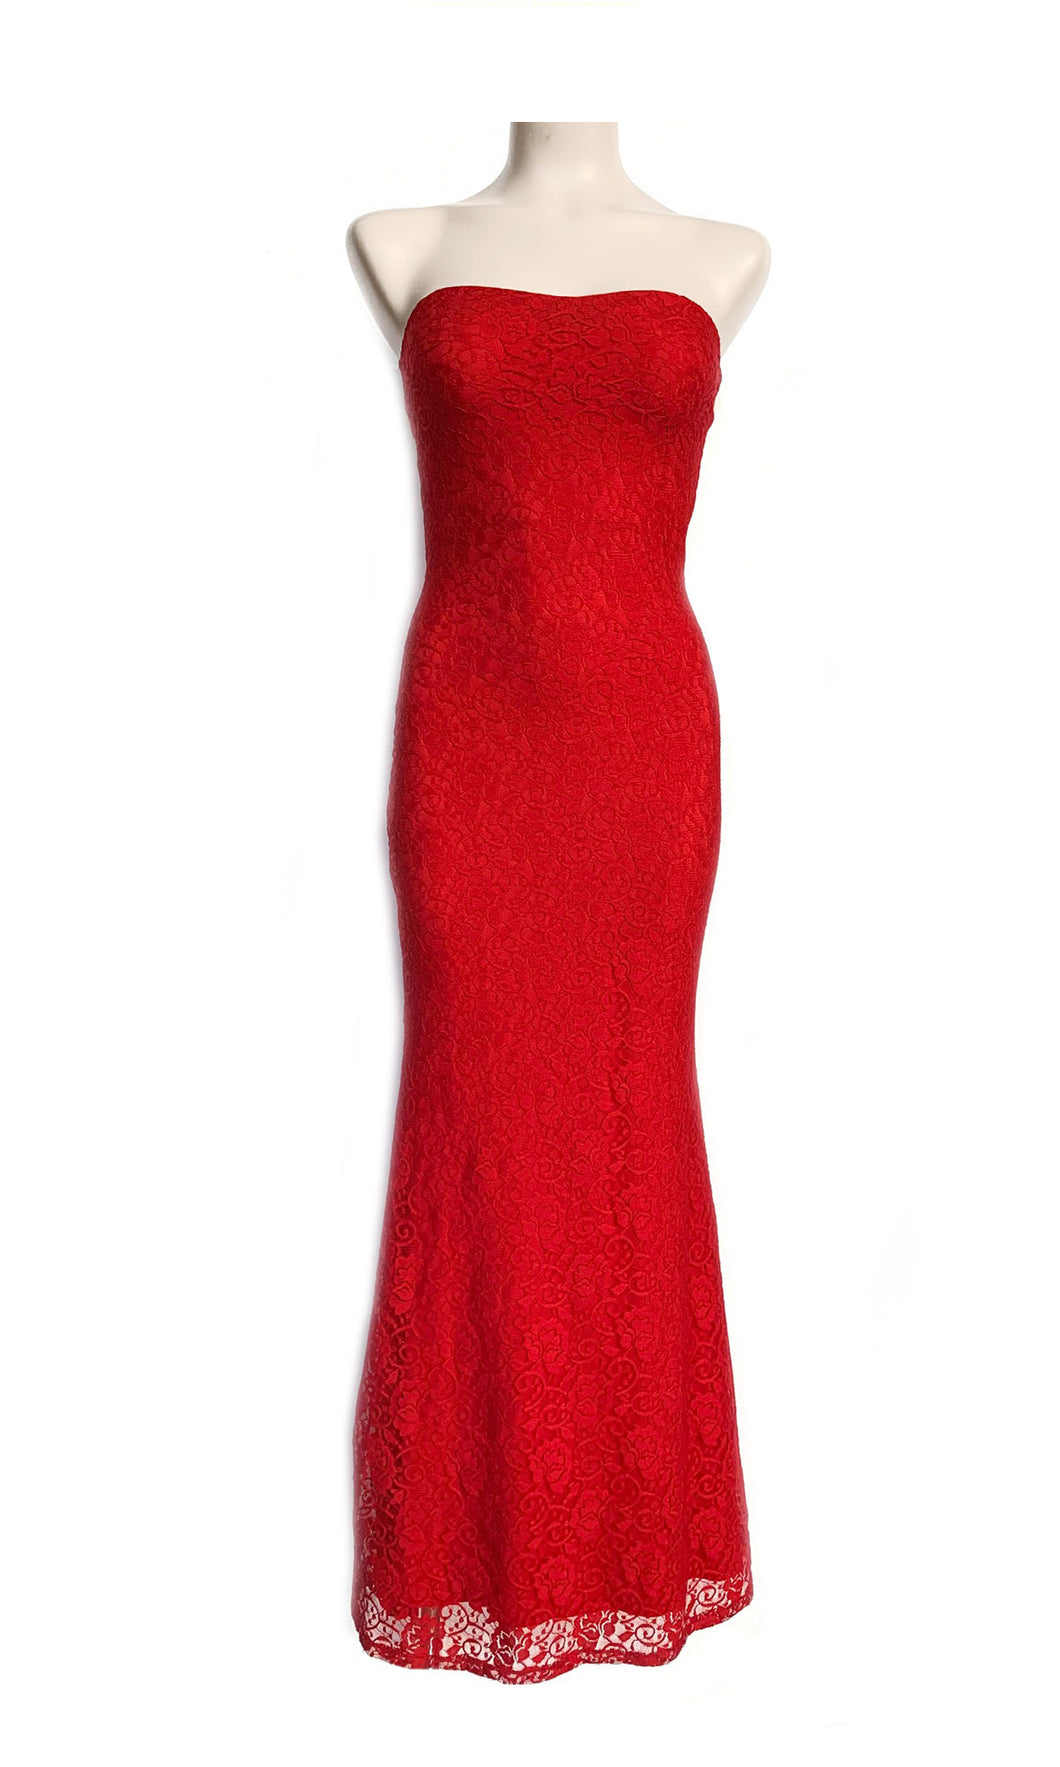 Red lace sheath